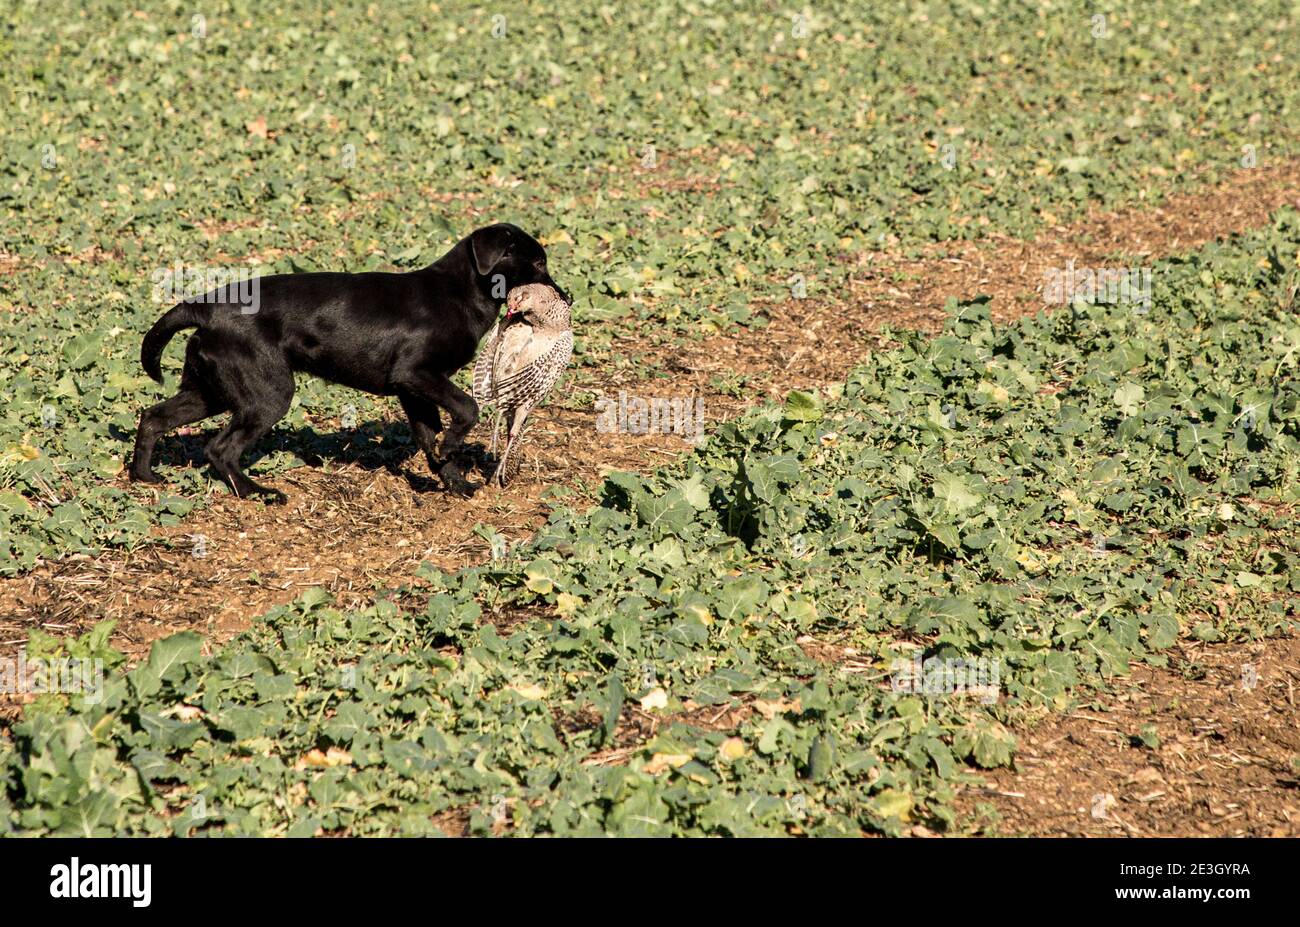 A working black Labrador dog carrying a shot pheasant. Stock Photo